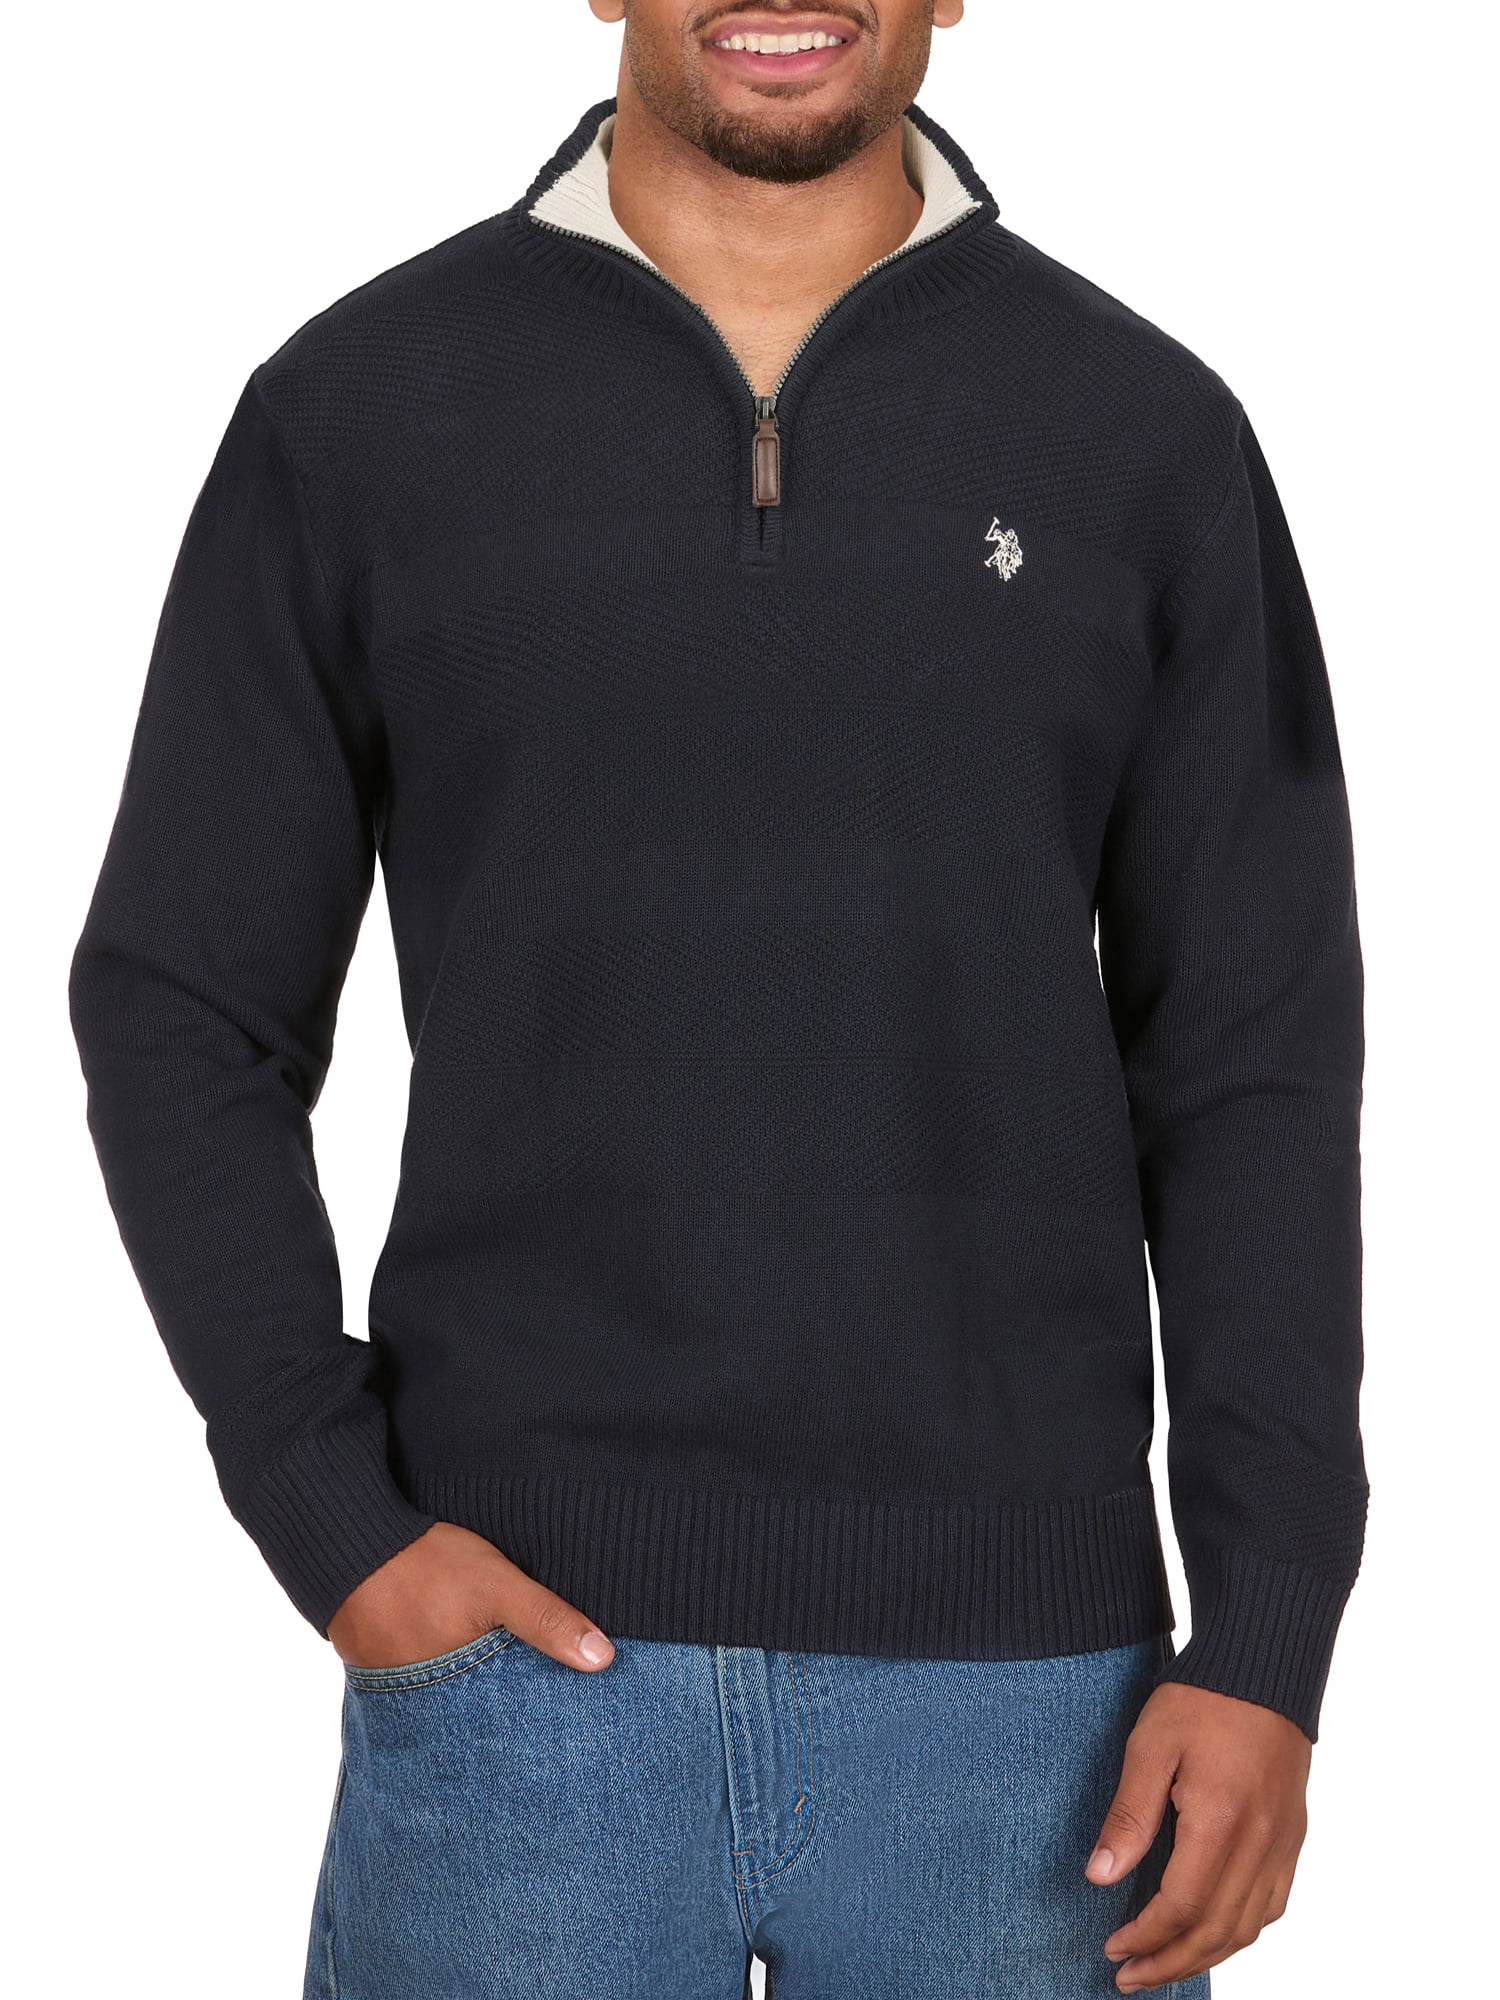 U.s. Polo Assn. Men's Sweaters - Walmart.com